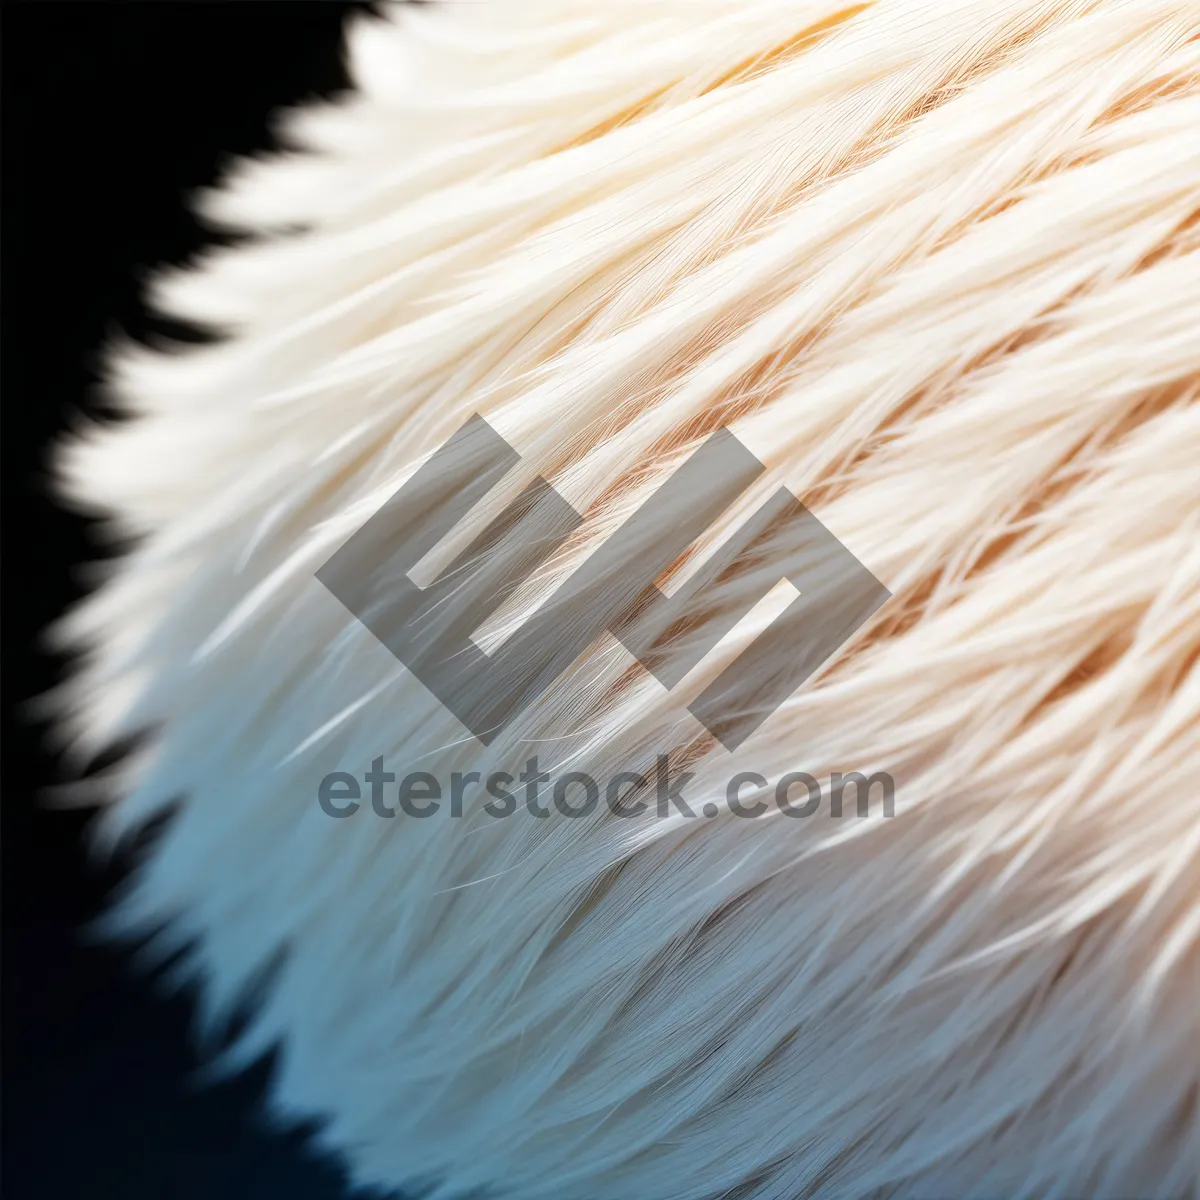 Picture of Bristle Brush Close-Up on Dandelion